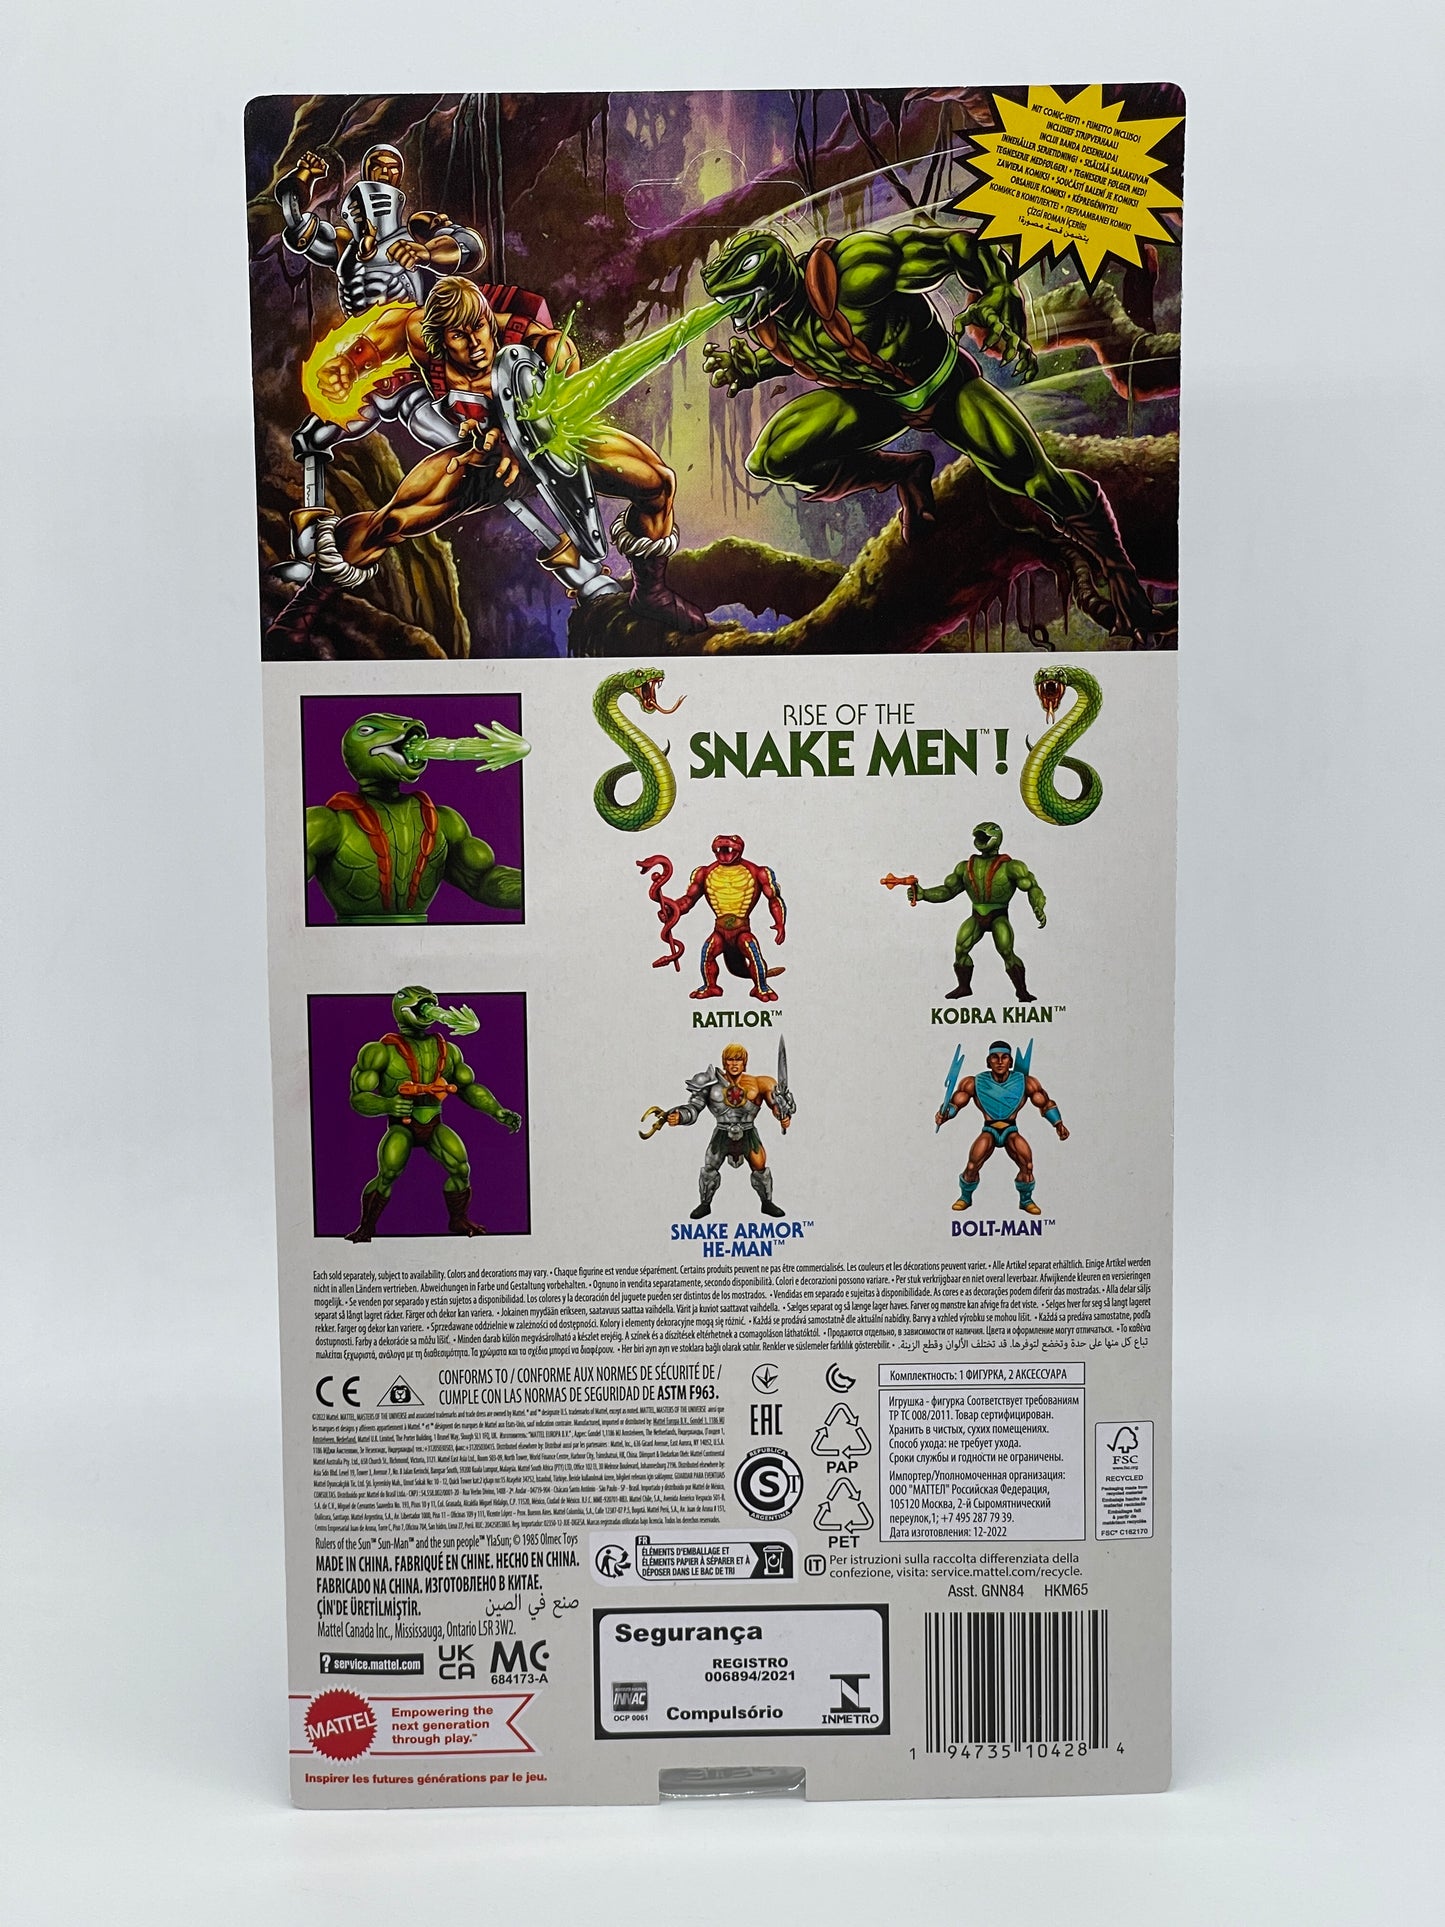 Masters of the Universe Origins "Kobra Khan" Snake Men unpunched MOTU (2022)